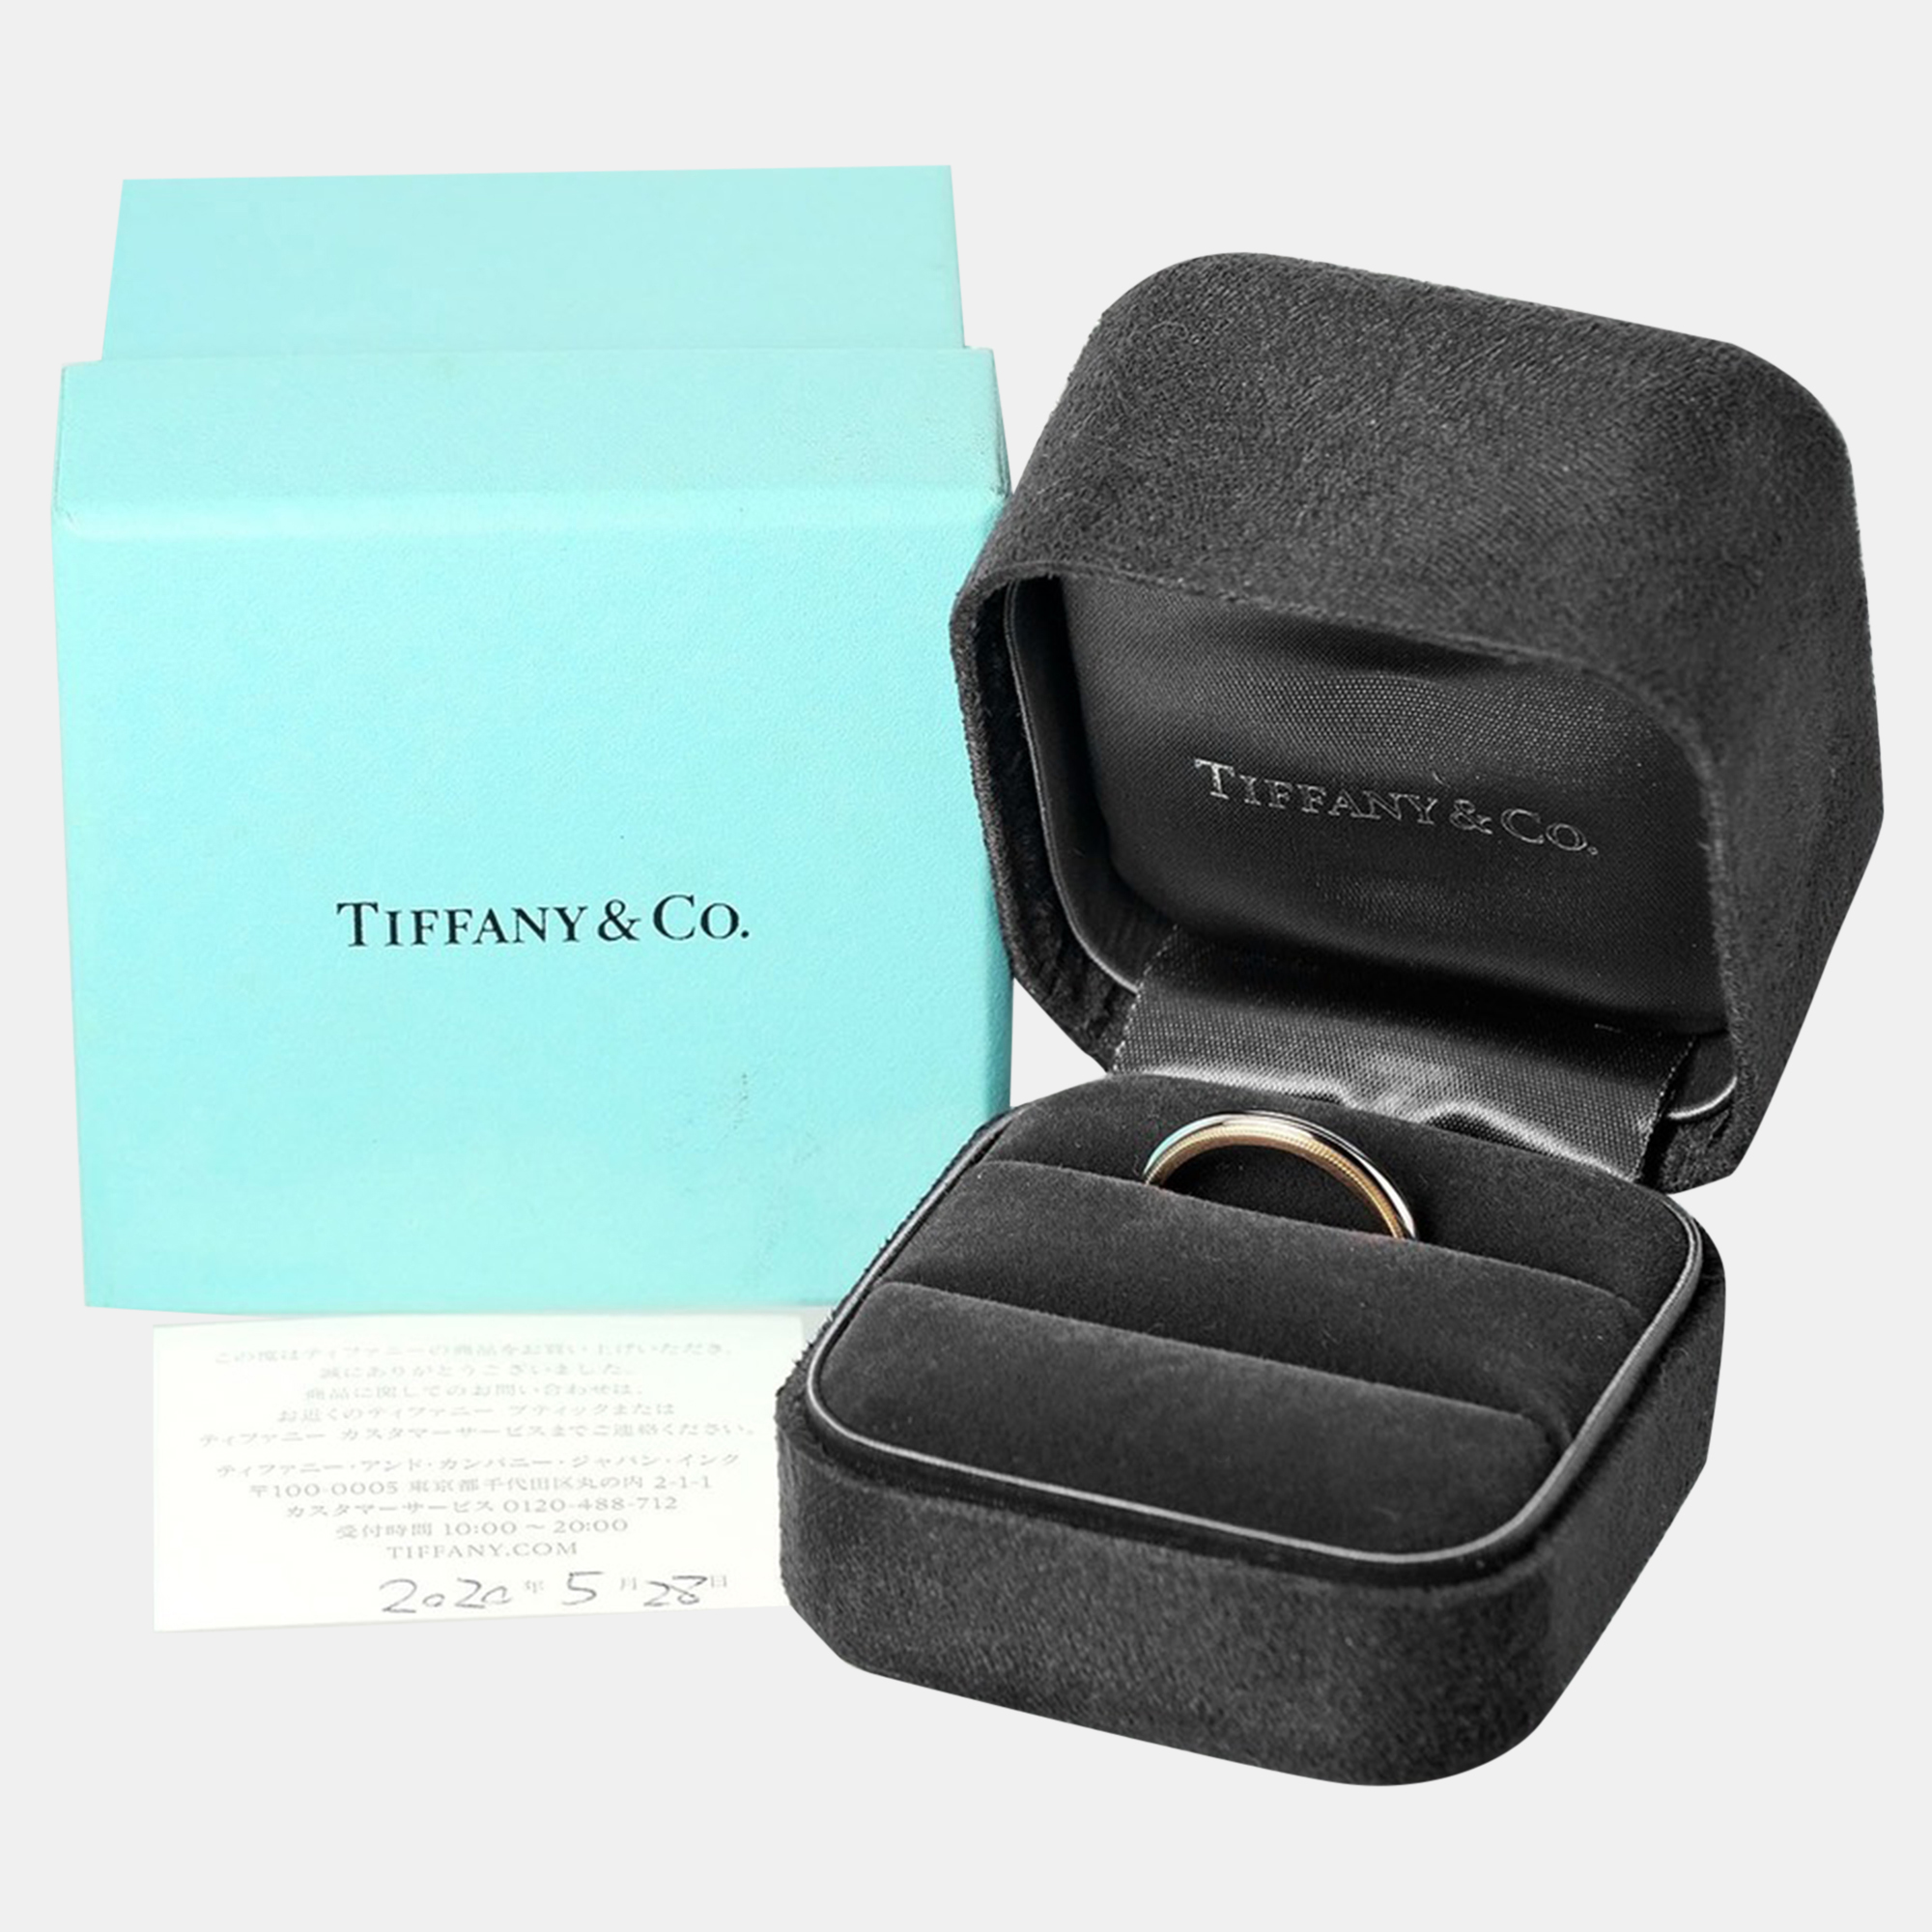 Tiffany & Co. Platinum And 18K Yellow Gold Two-Tone Milgrain Wedding Band Ring EU 61